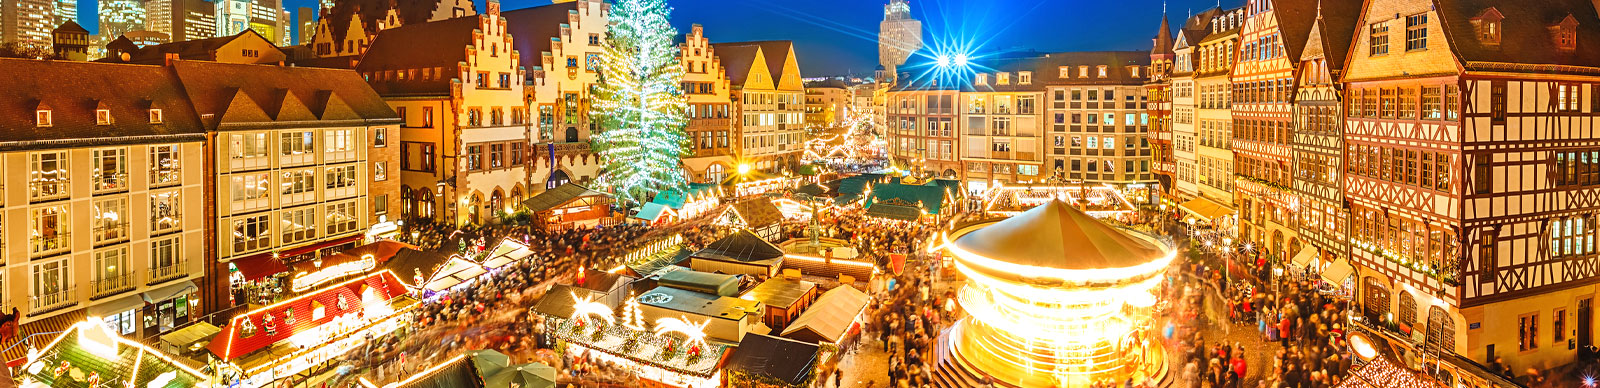 Christmas Market Belgium